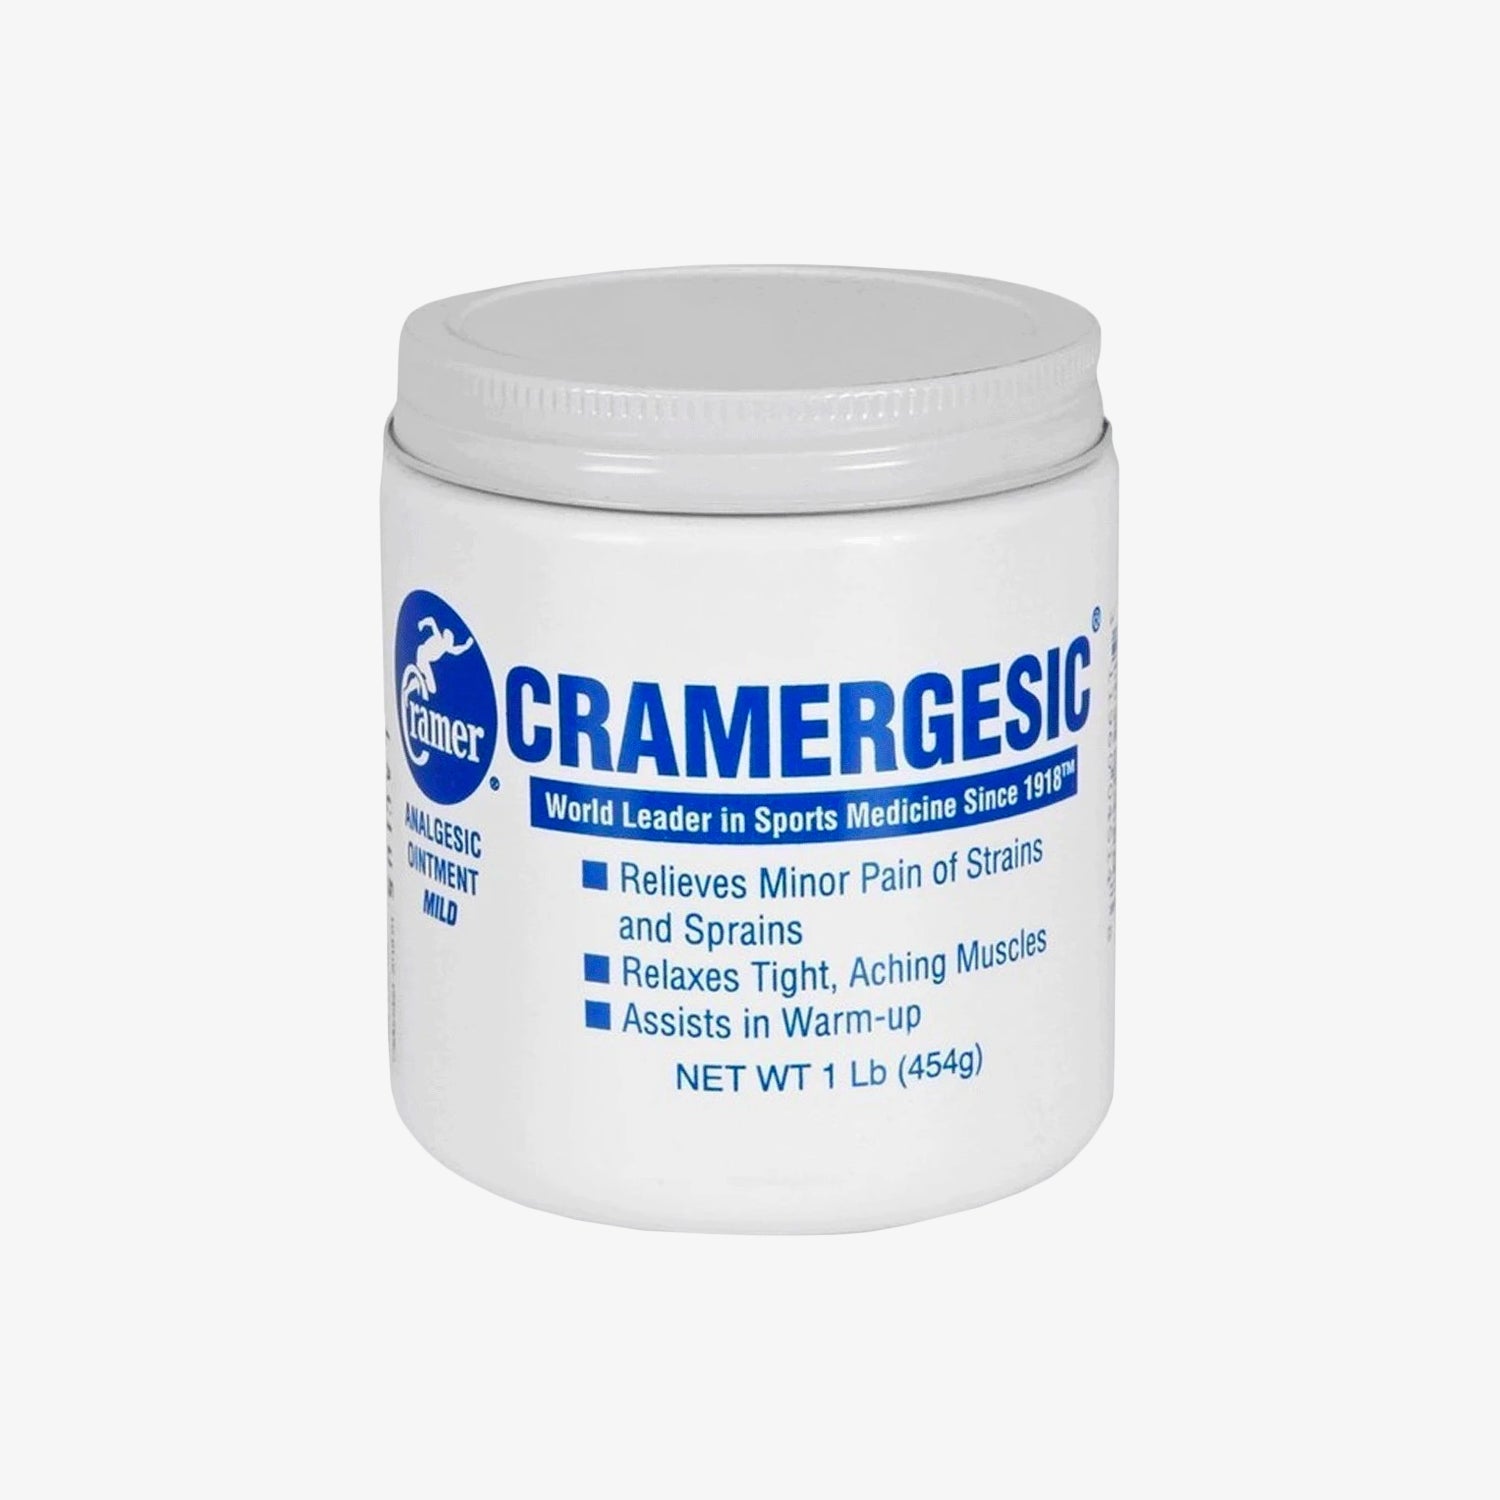 Cramer Cramergesic Analgesic Ointment - 1 lb Jar